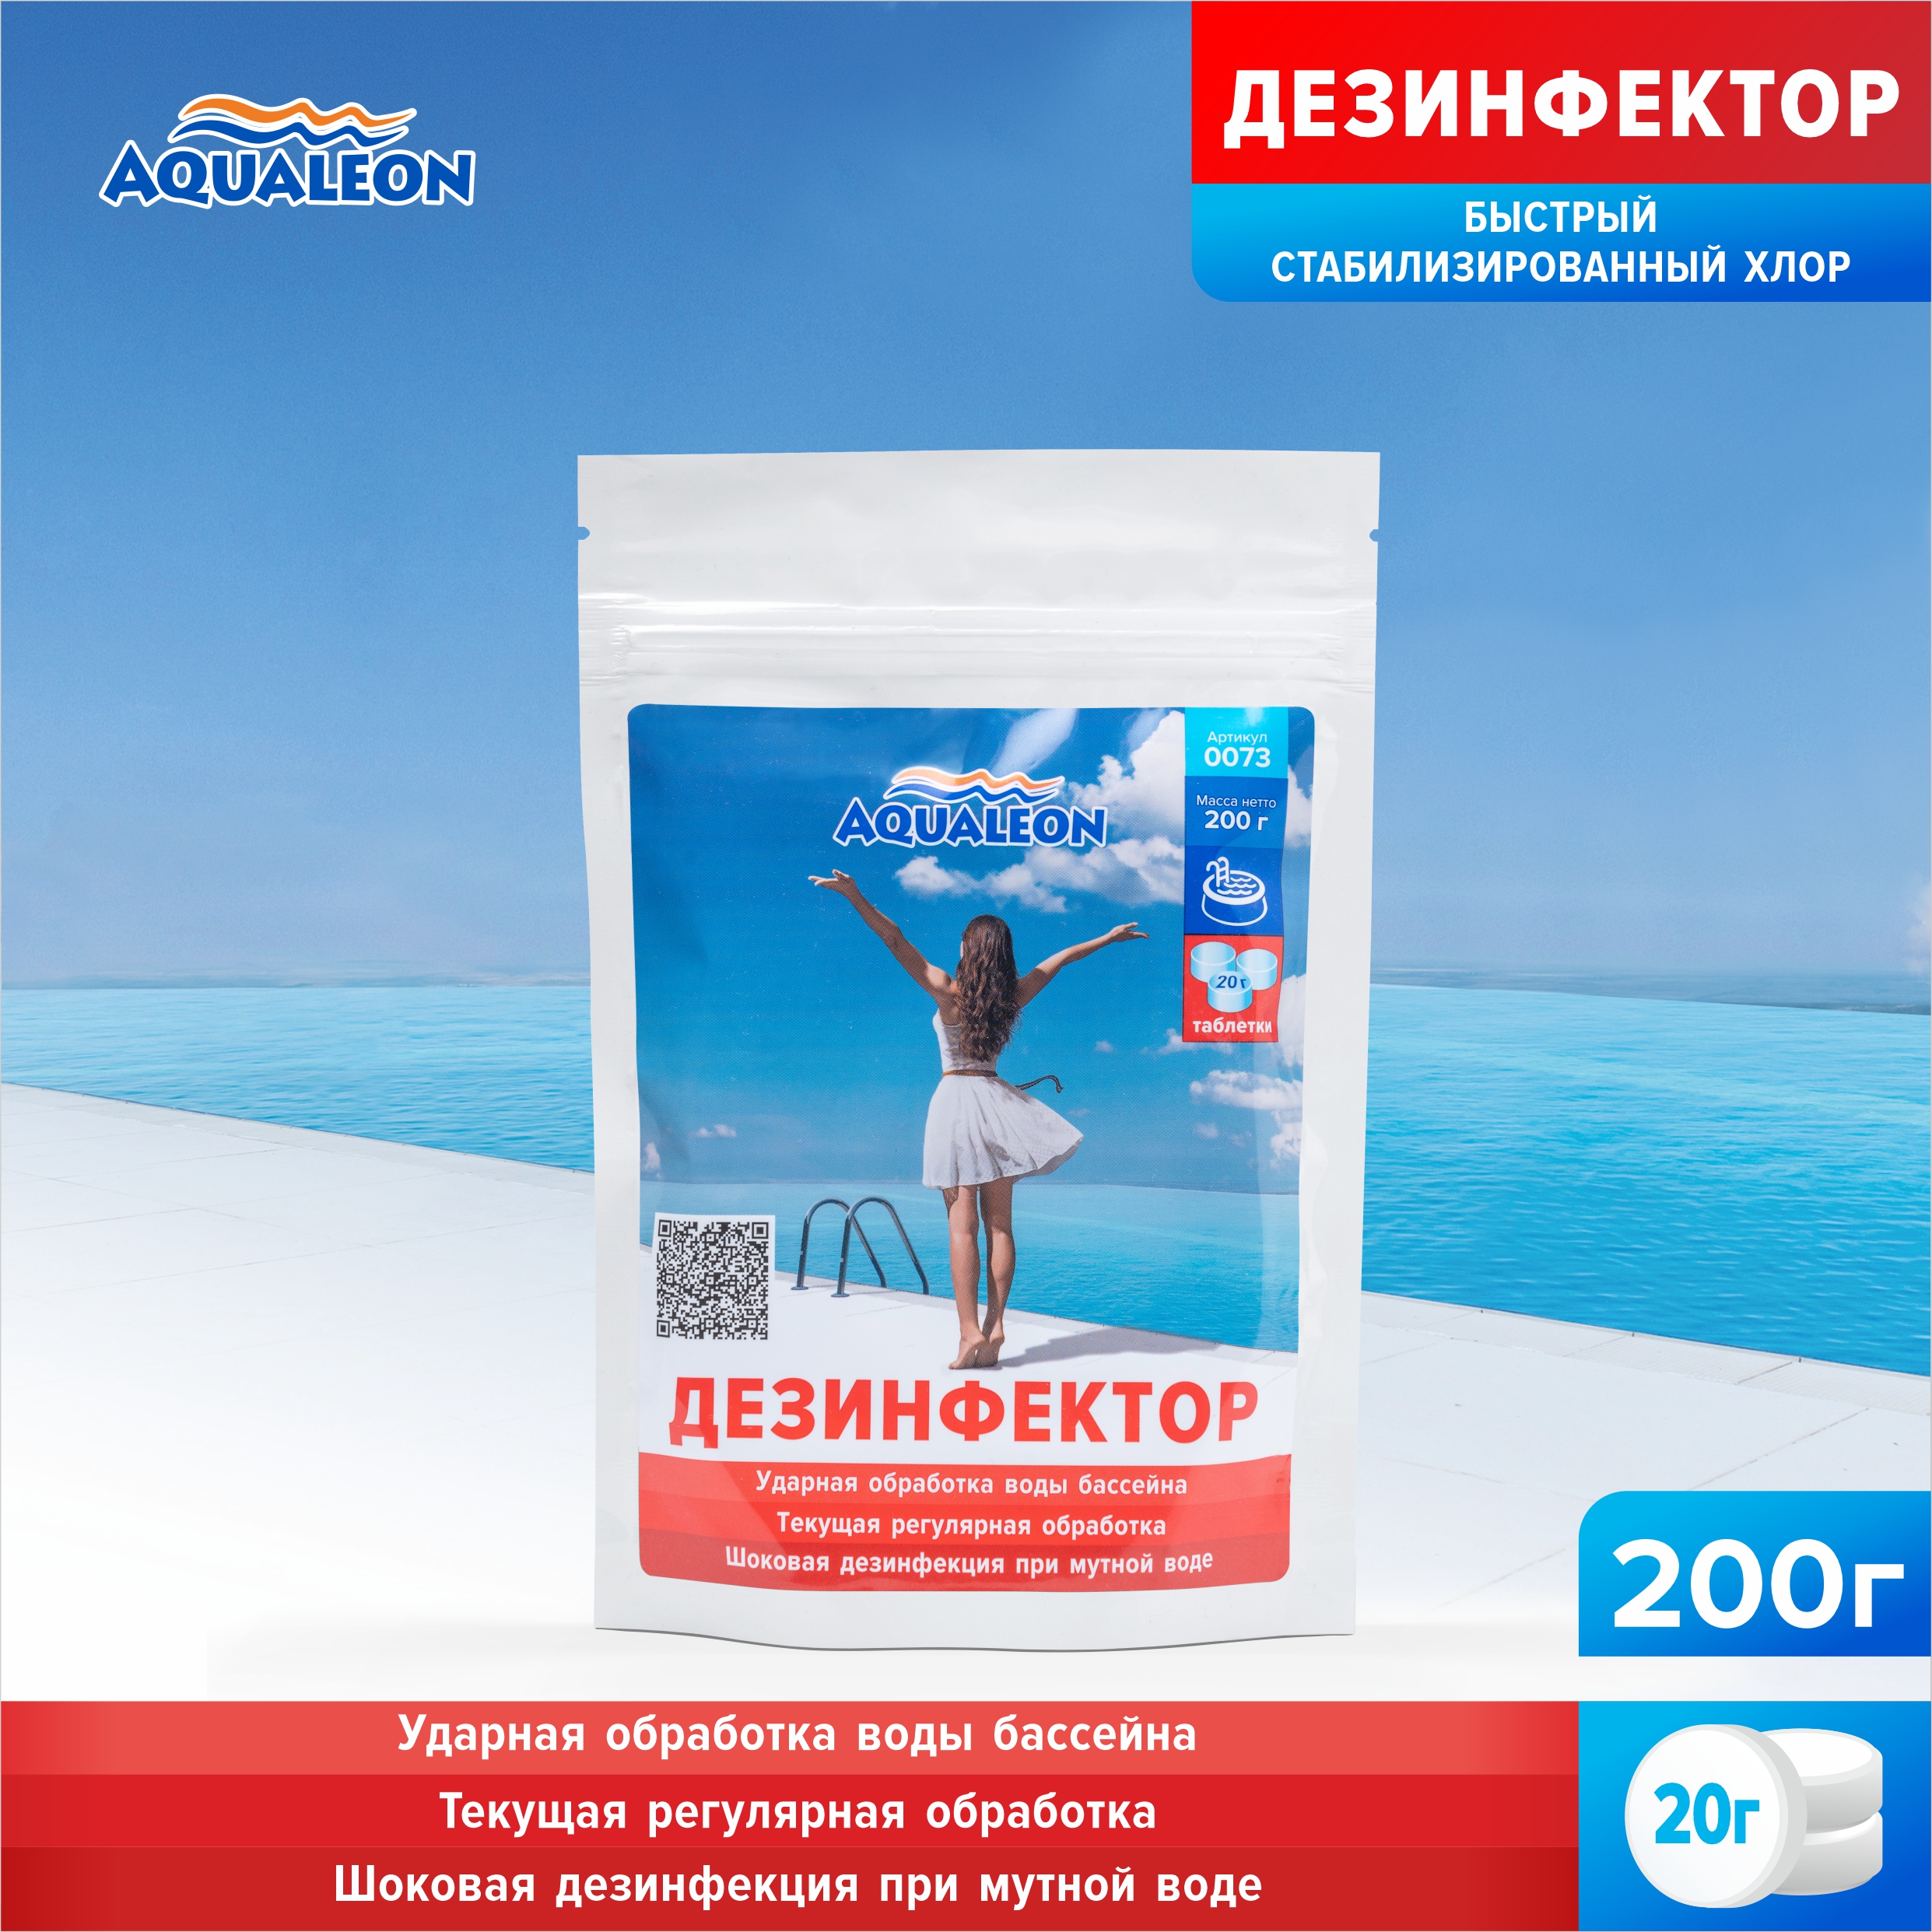 Быстрый хлор для бассейна (БСХ) Aqualeon таблетки по 20 гр., zip-пакет 200 гр.